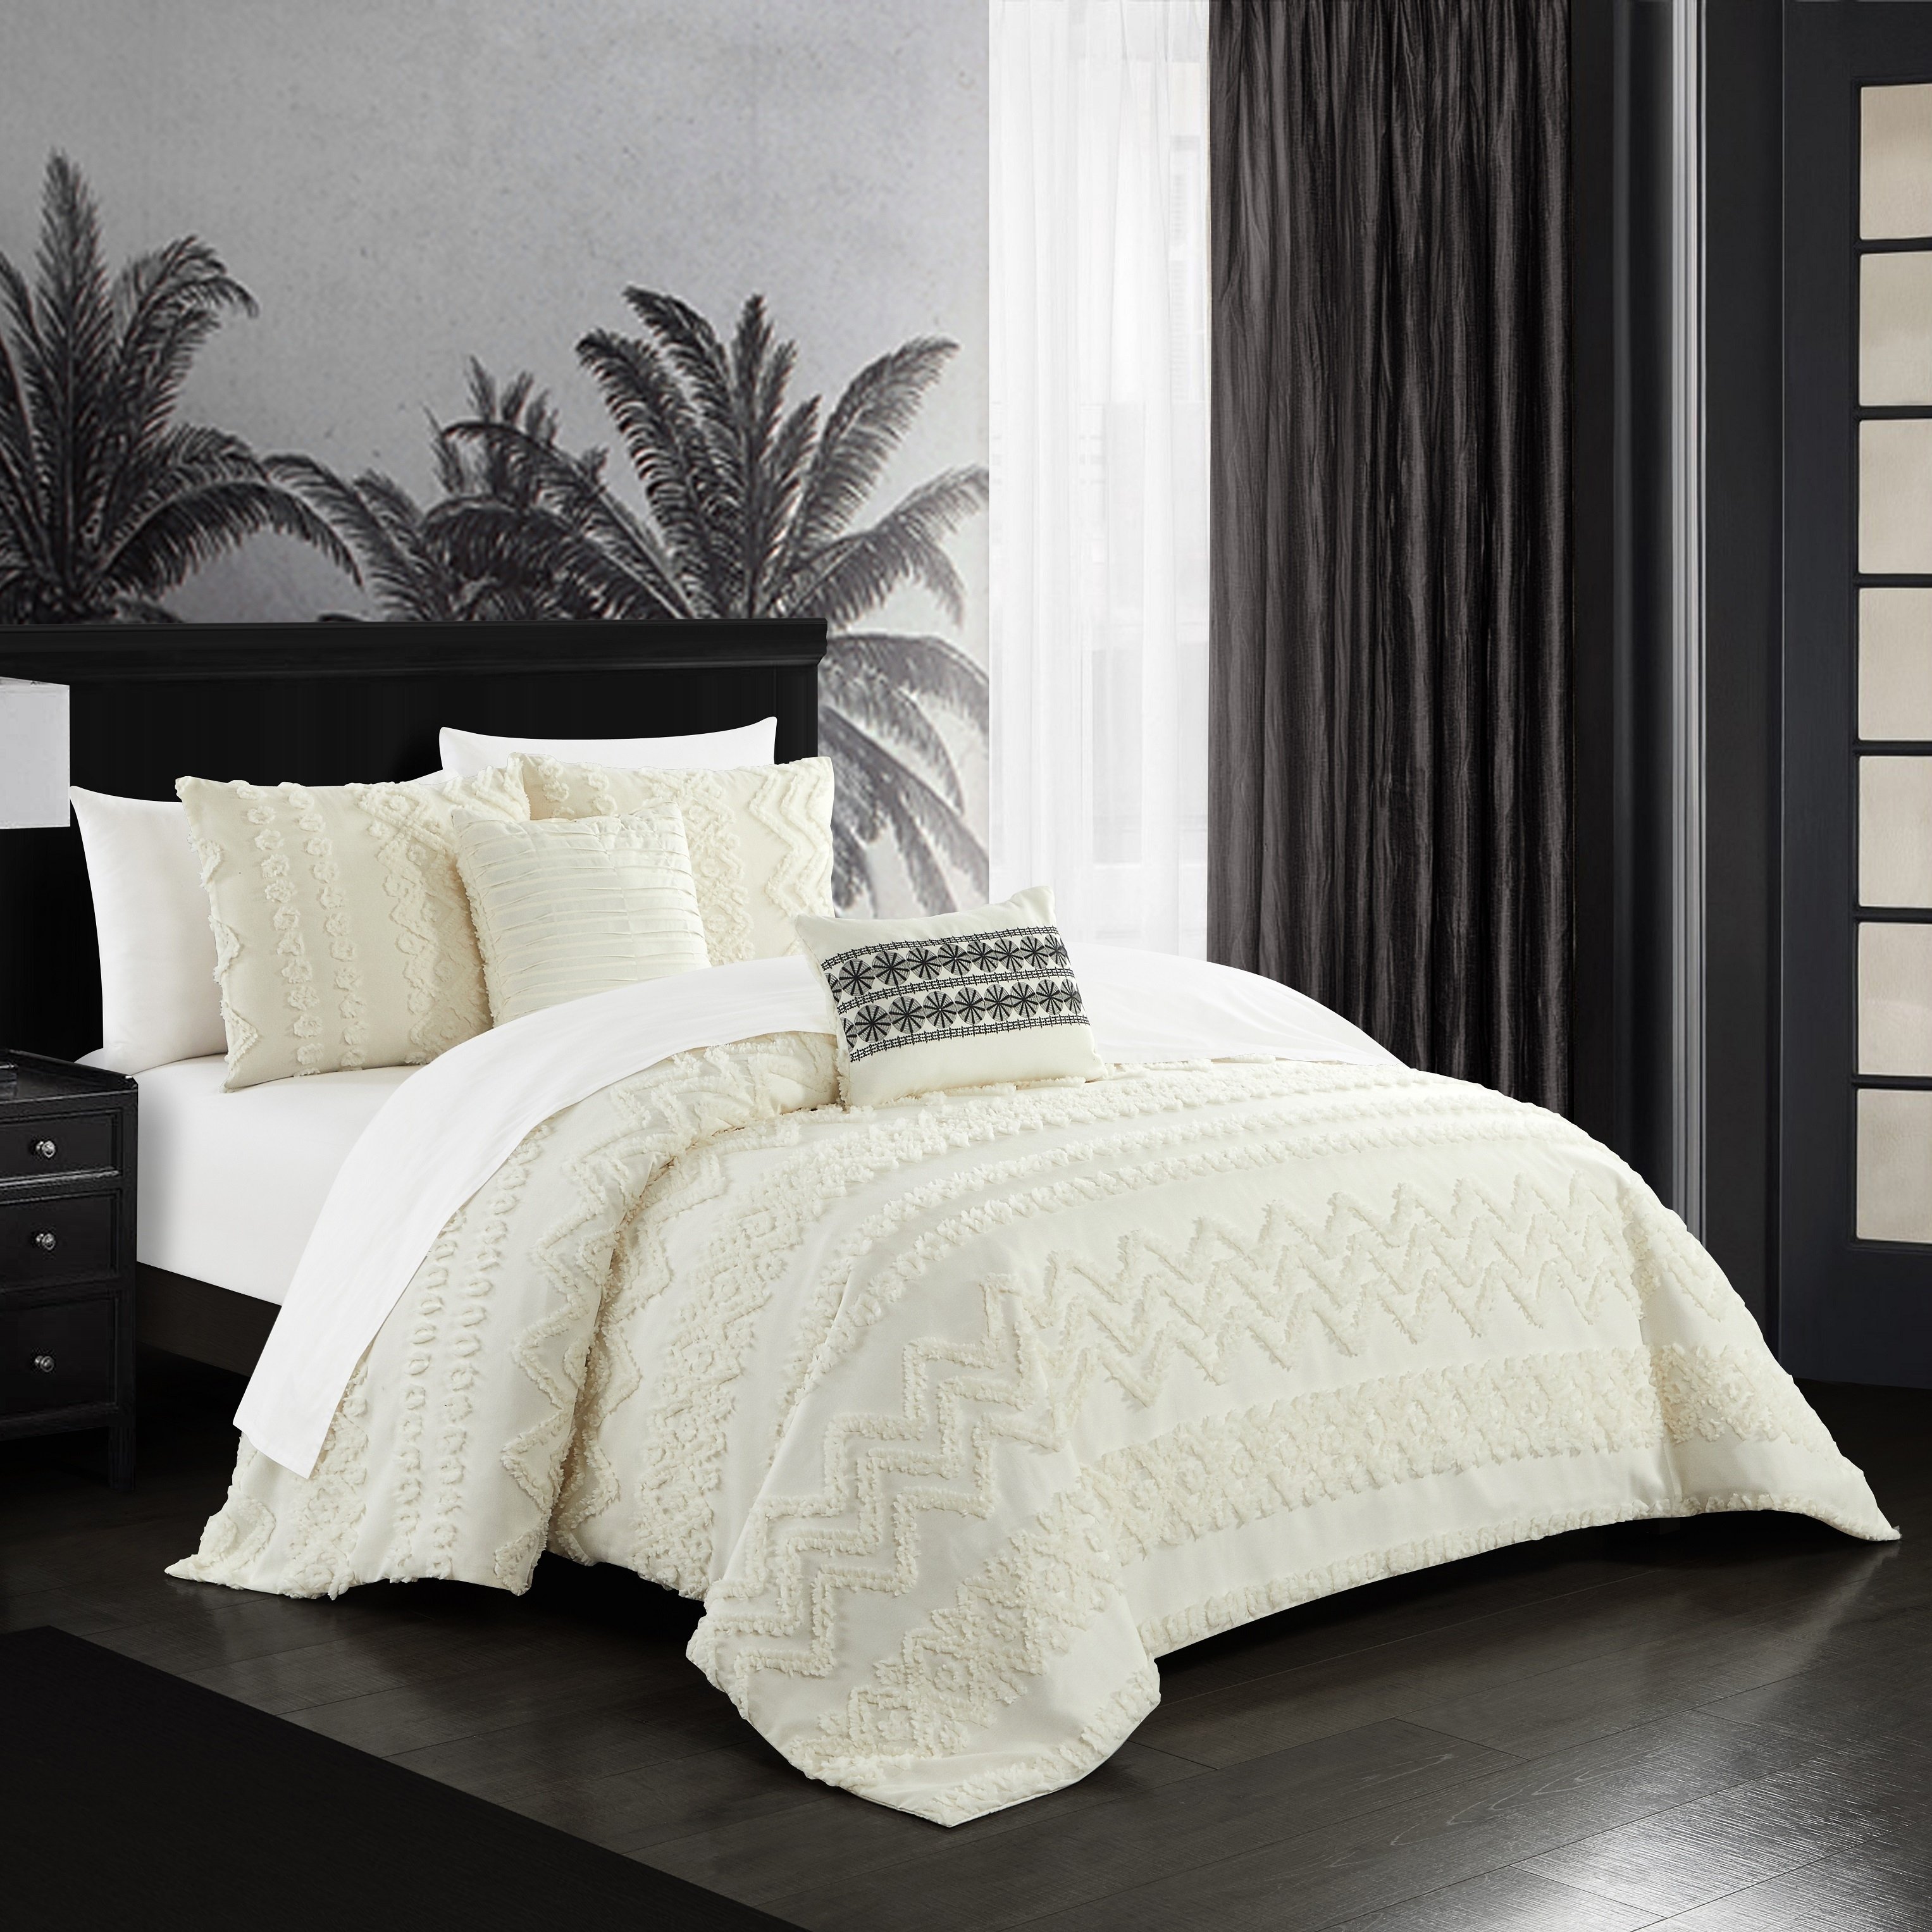 Jenson 5 Piece Comforter Set Jacquard Chevron Geometric Pattern Design Bedding - White, King